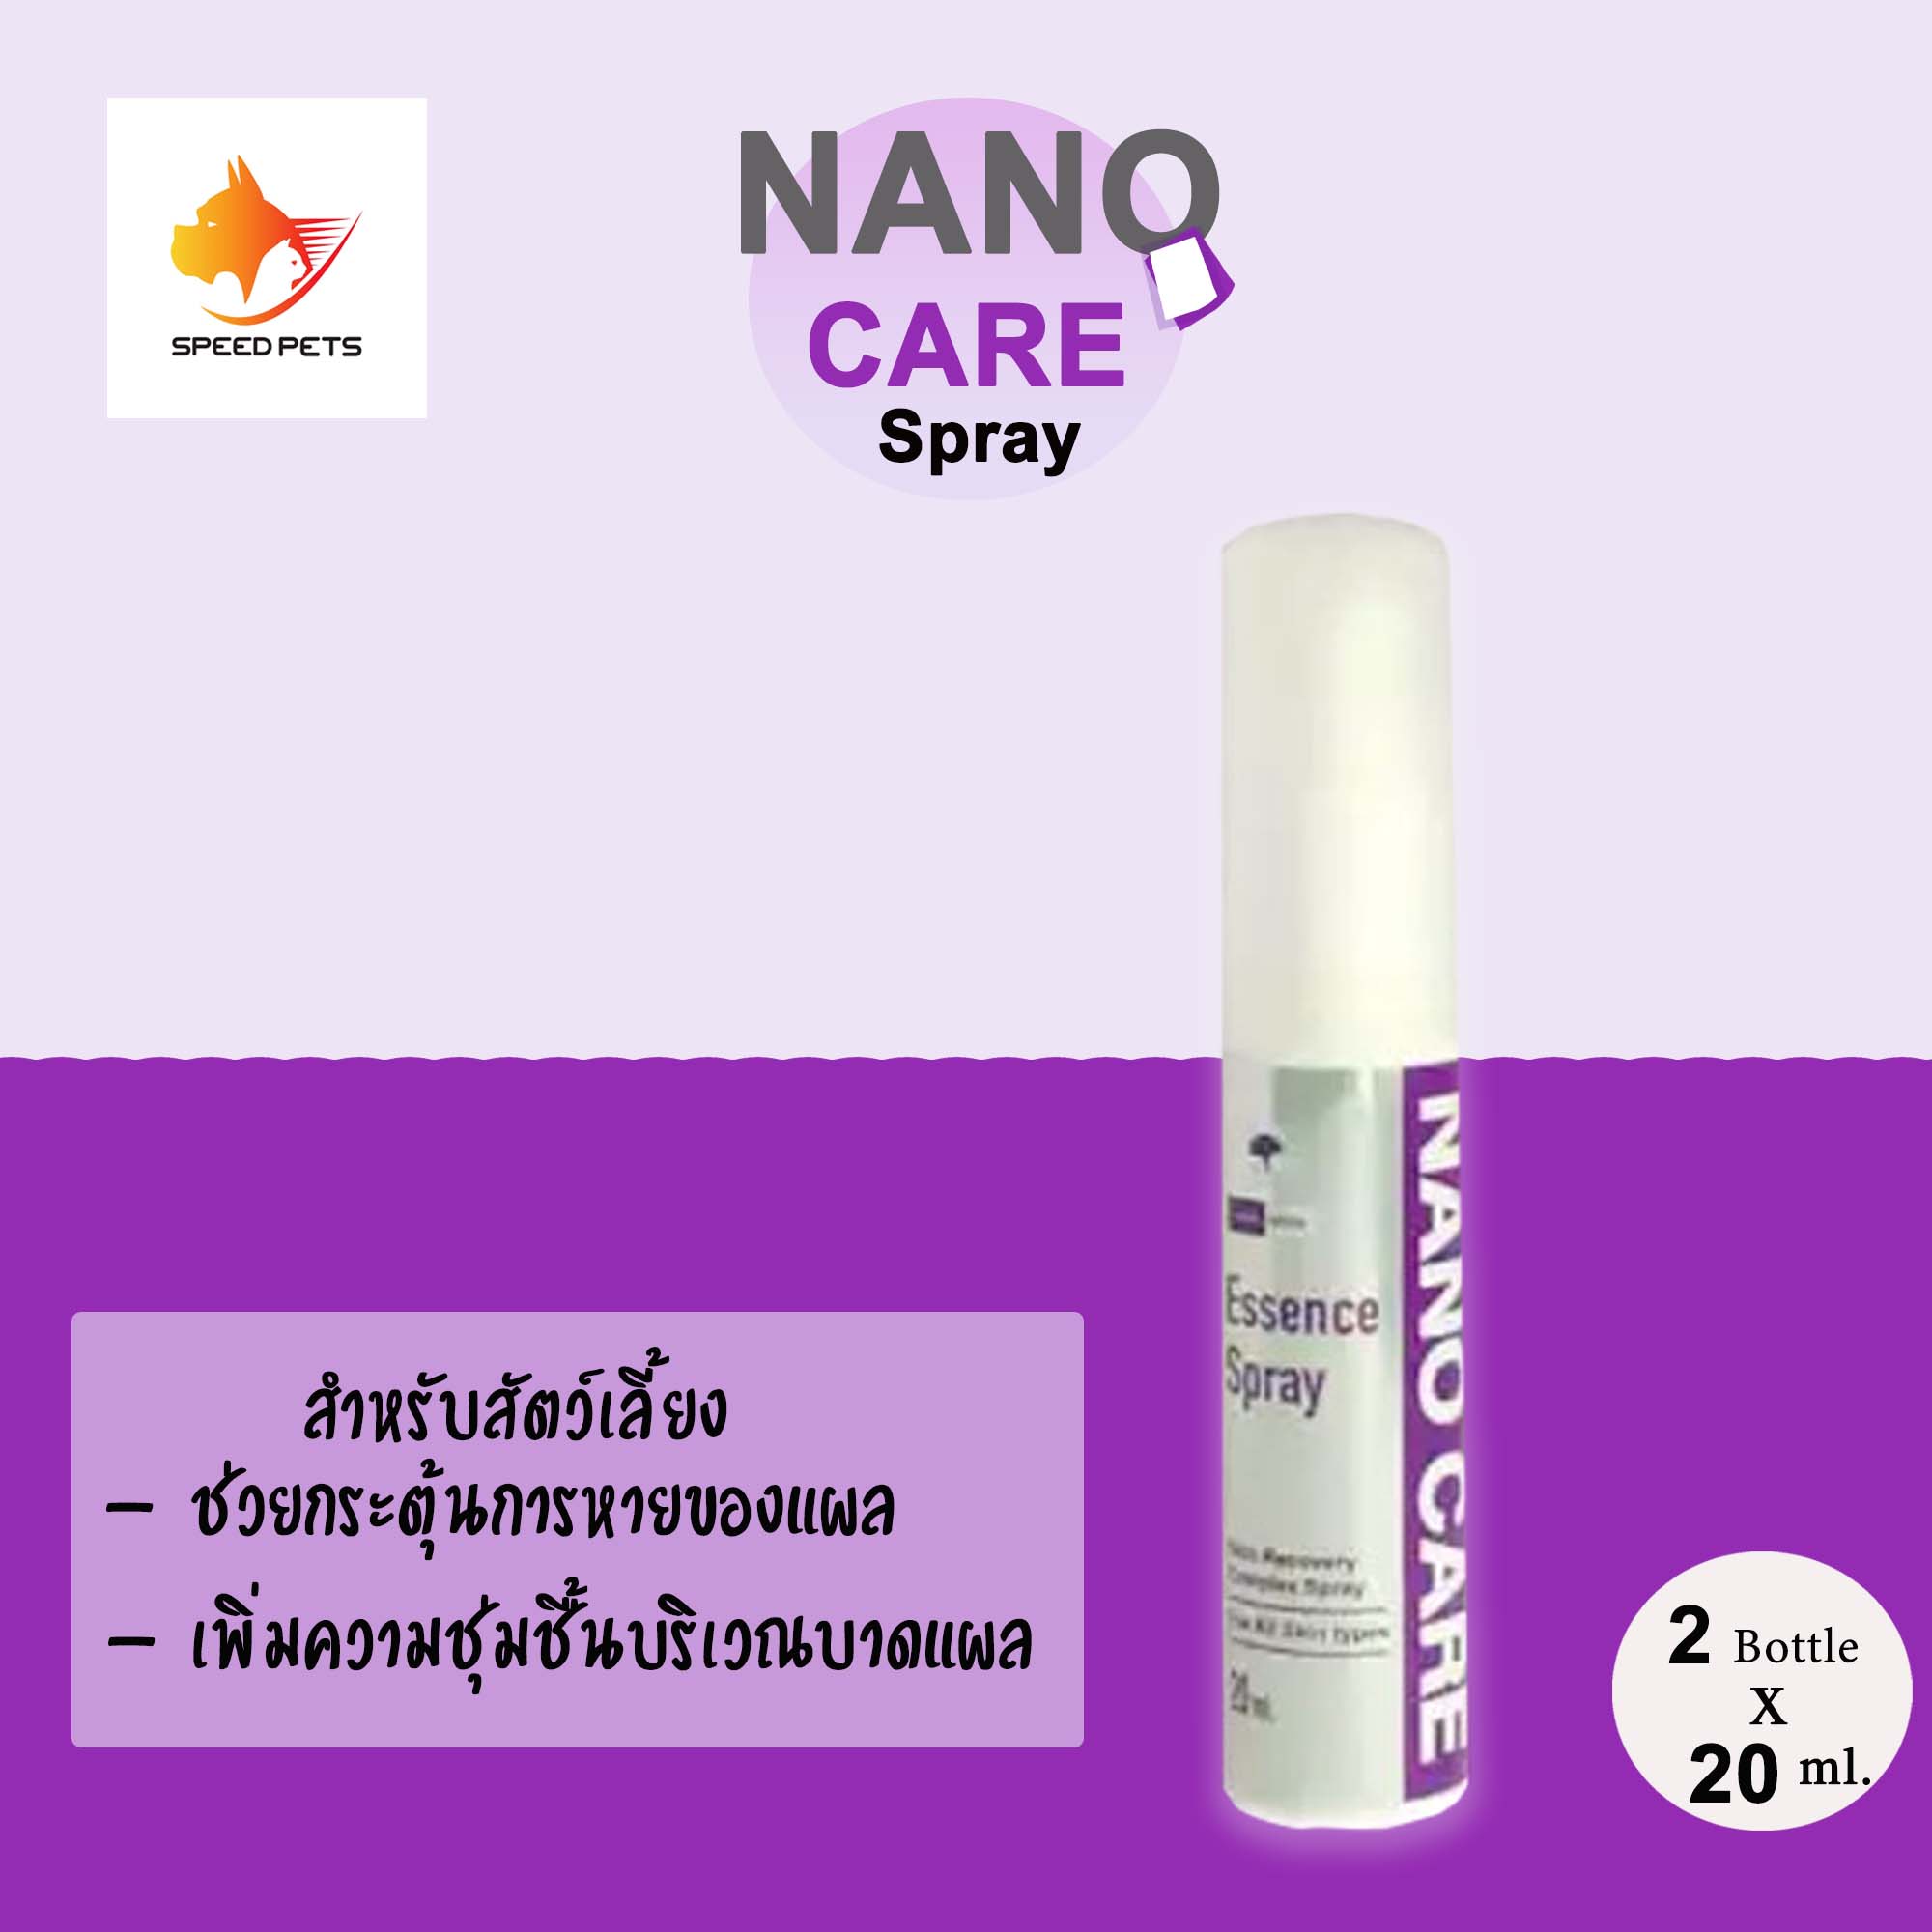 Nano Care Spray 20ml สเปรย์ นาโน แบบพ่น พ่นแผล สัตว์เลี้ยง ขนาด 20 ml x 2 ขวด